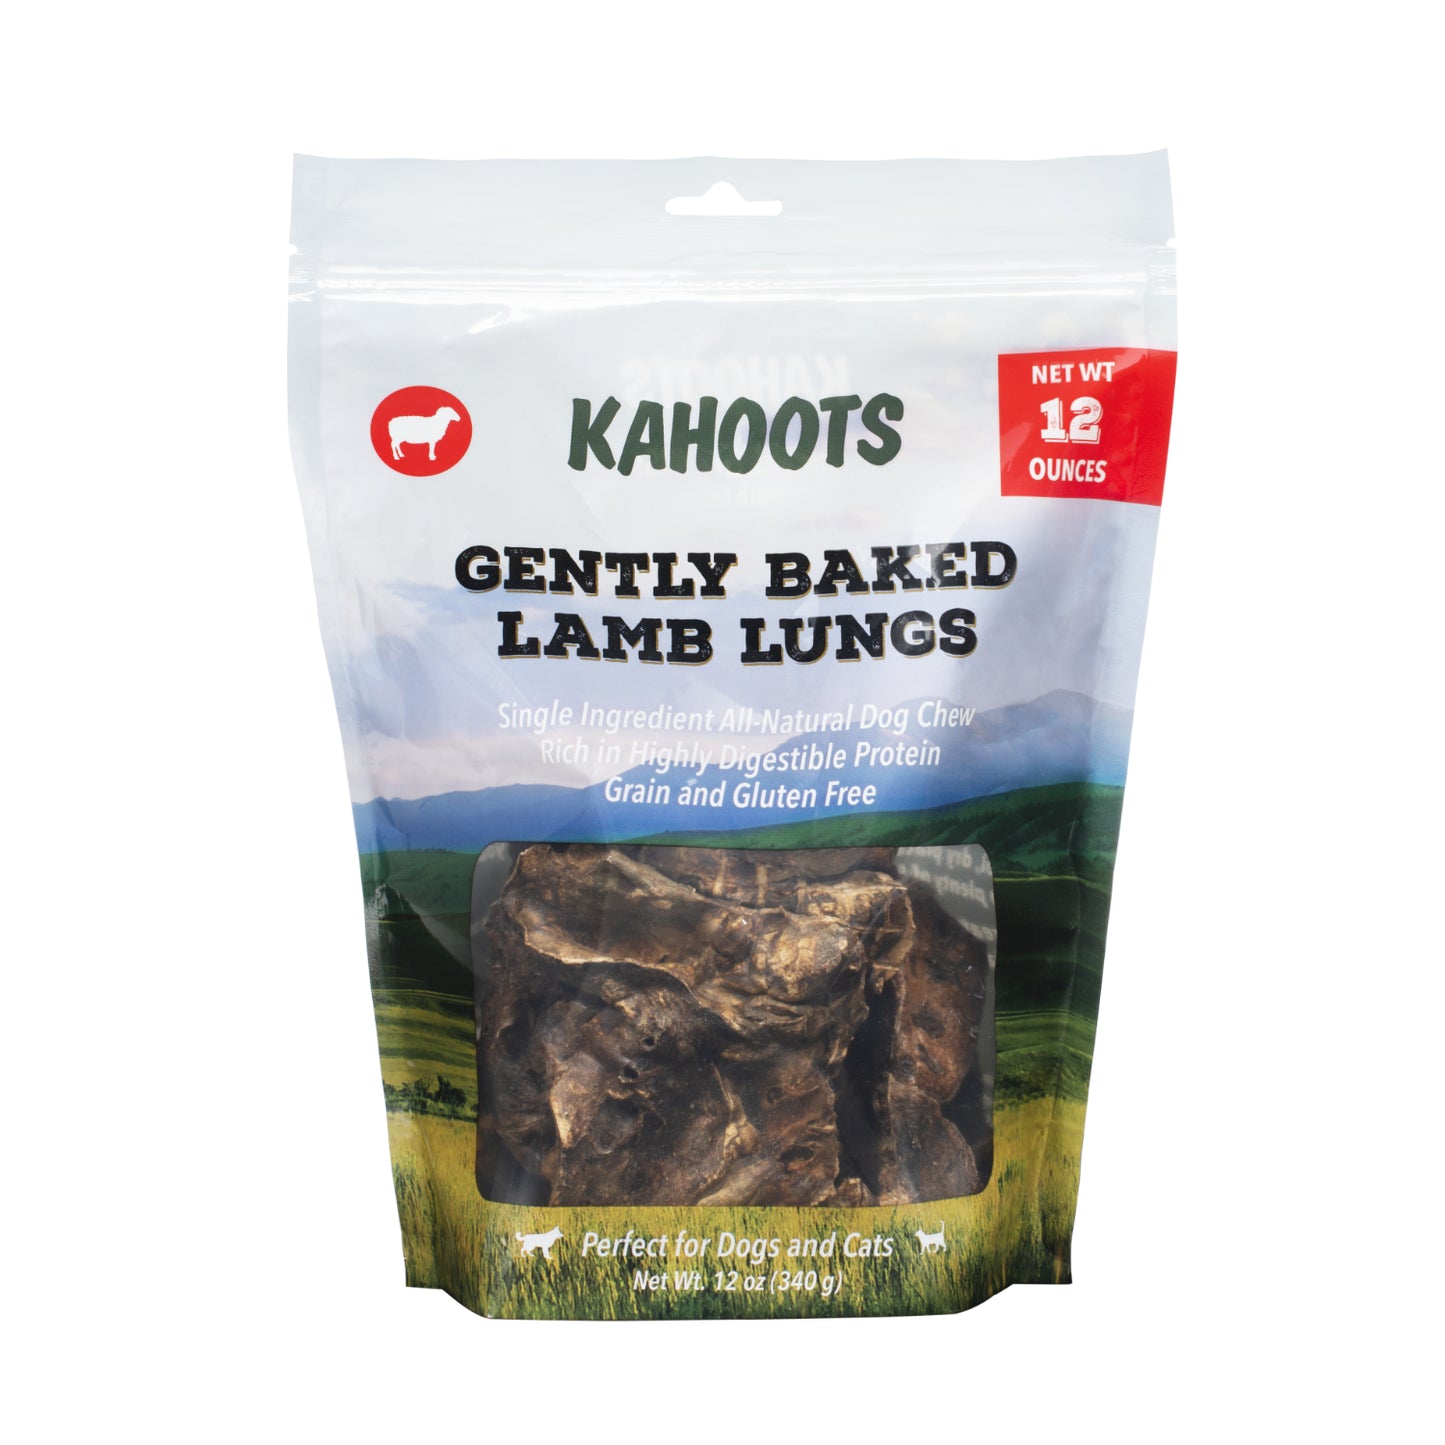 Lamb lung dog treats in bag